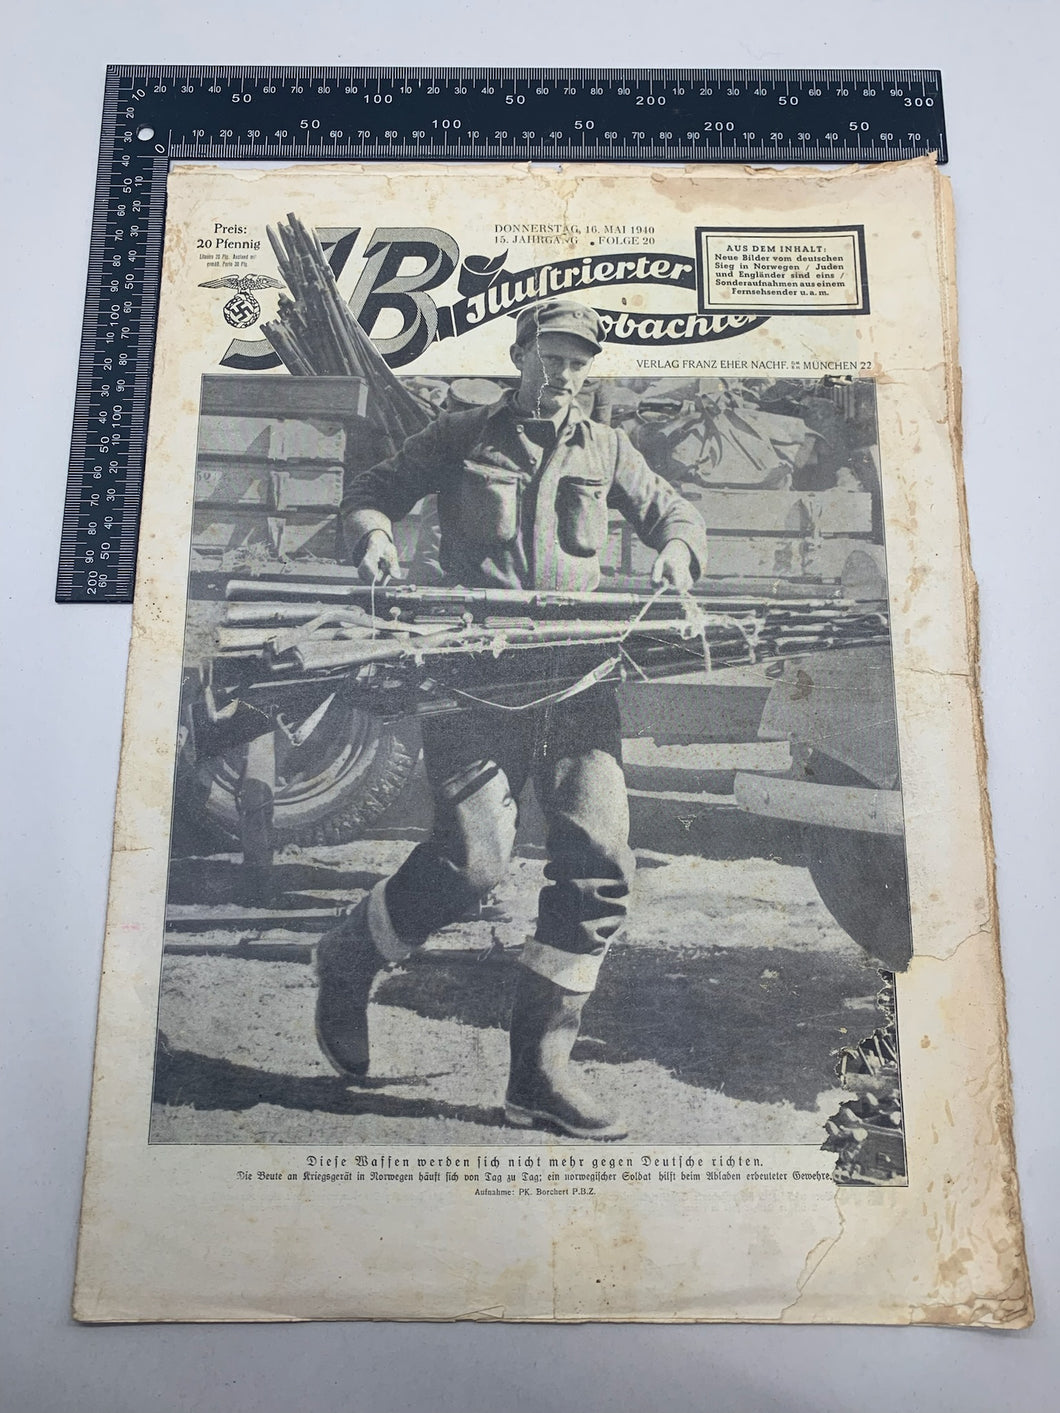 JB Juustrierter Beobachter NSDAP Magazine Original WW2 German - 16th May 1940